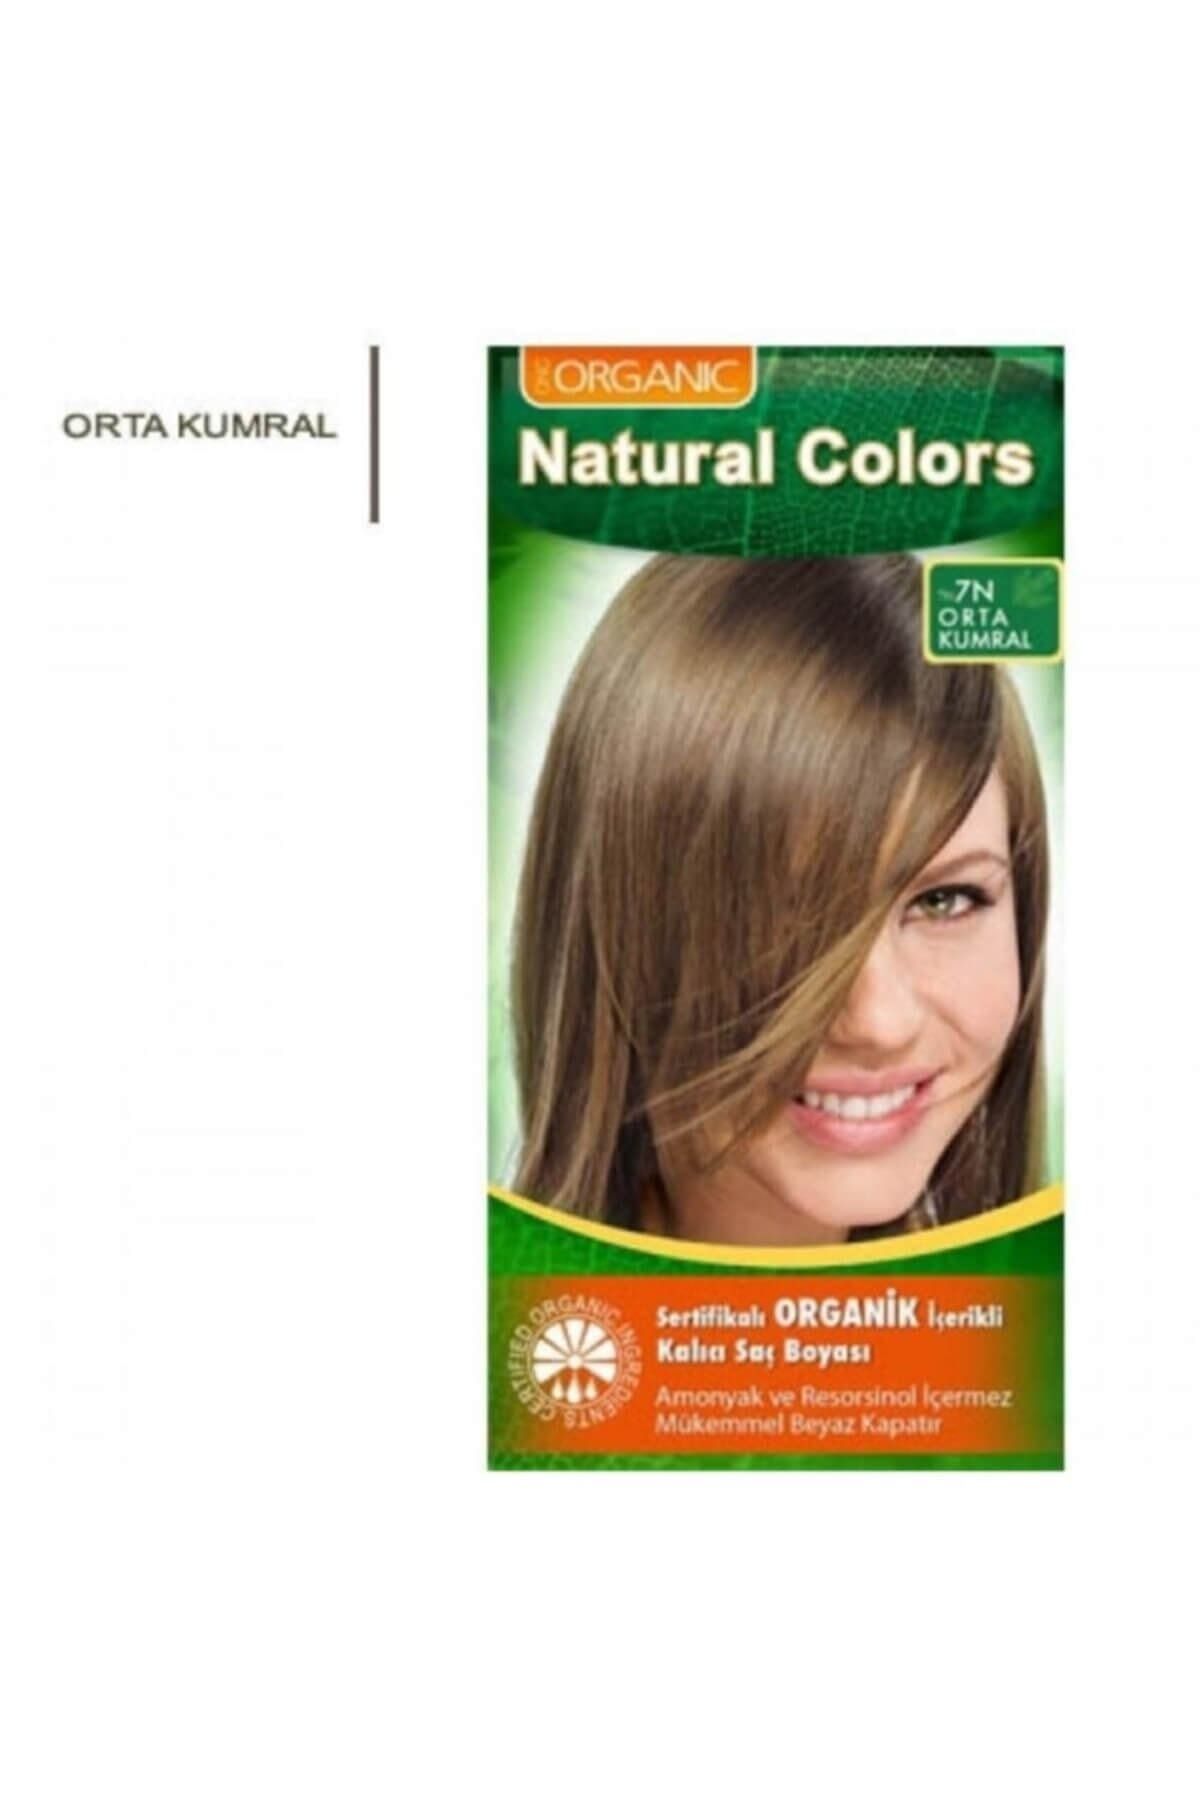 Natural Colors Saç Boyası - Orta Kumral 7n 8697722240160